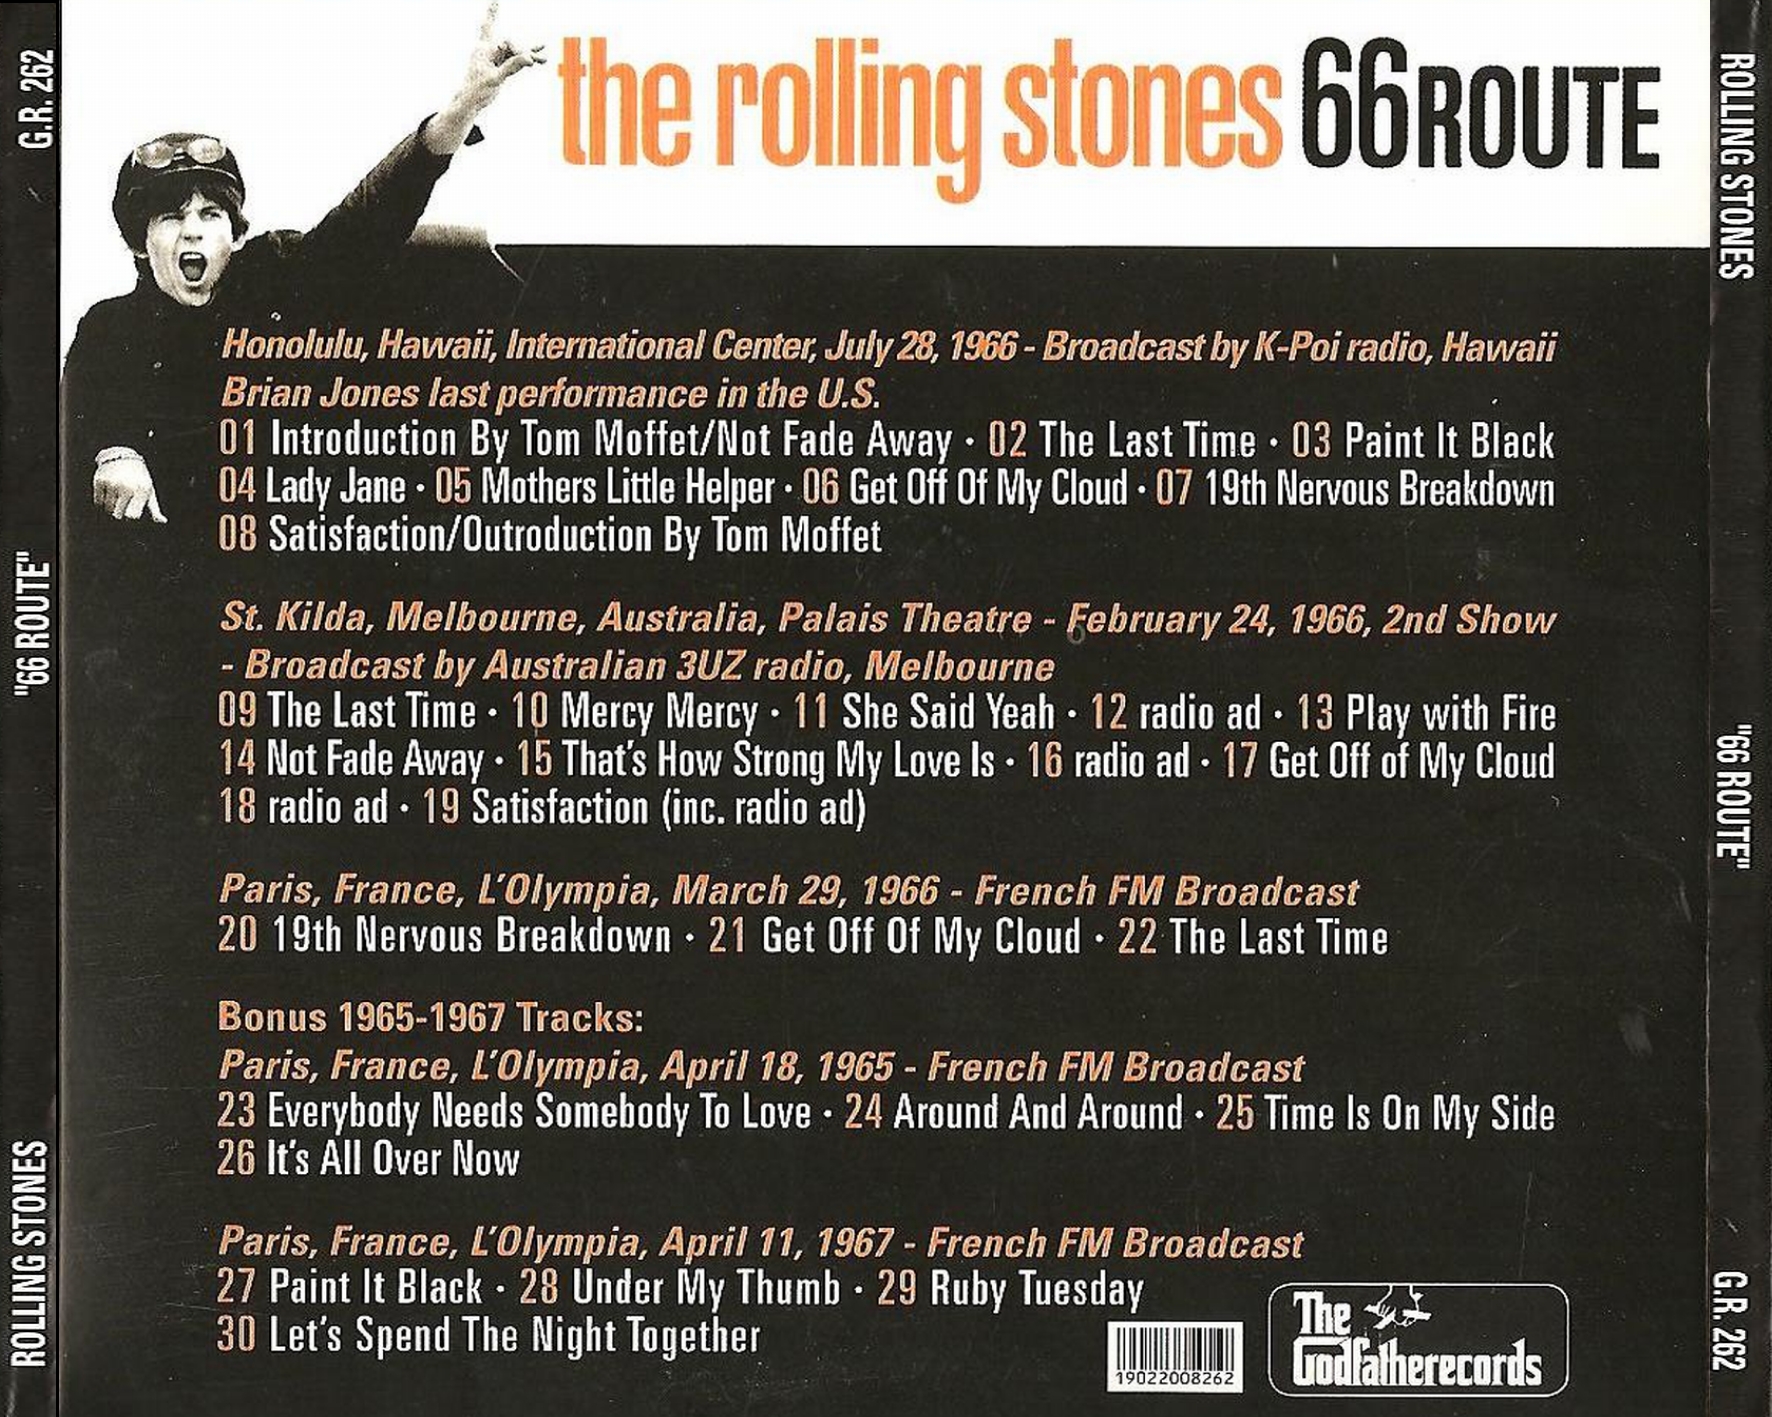 RollingStones1965-1967_66RouteHonoluluHI.jpg